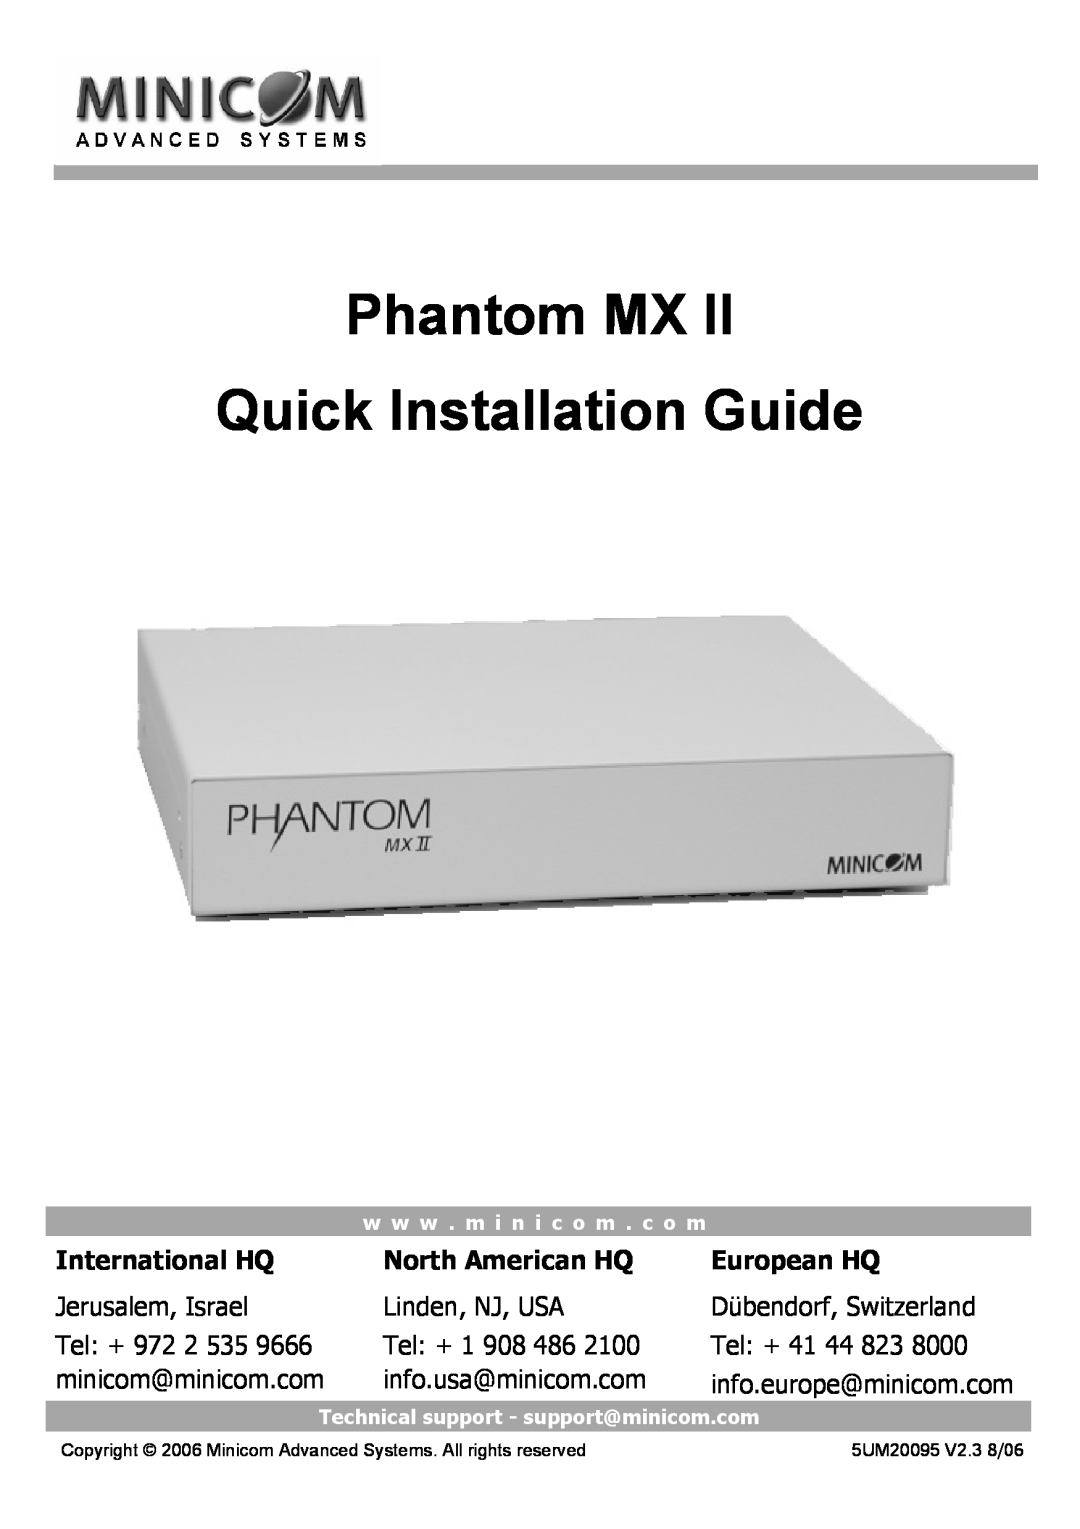 Minicom Advanced Systems MX II manual Phantom MX Quick Installation Guide, International HQ, North American HQ 